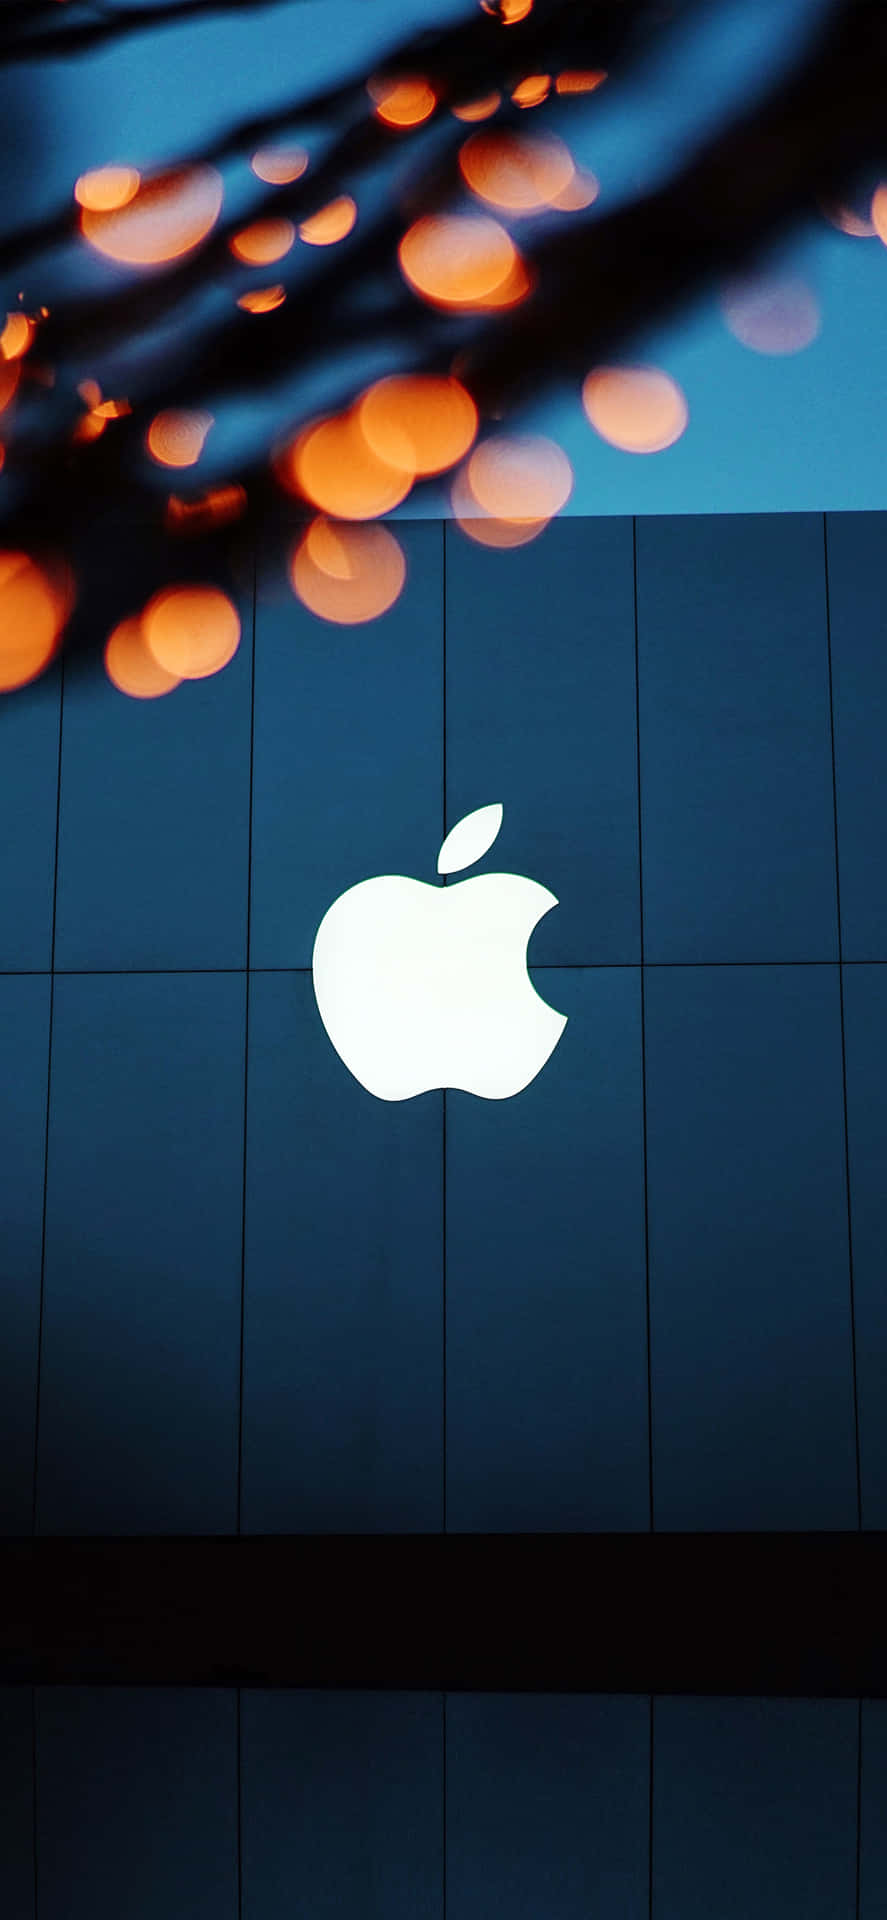 The Apple Logo illuminated on an iPhone X Wallpaper